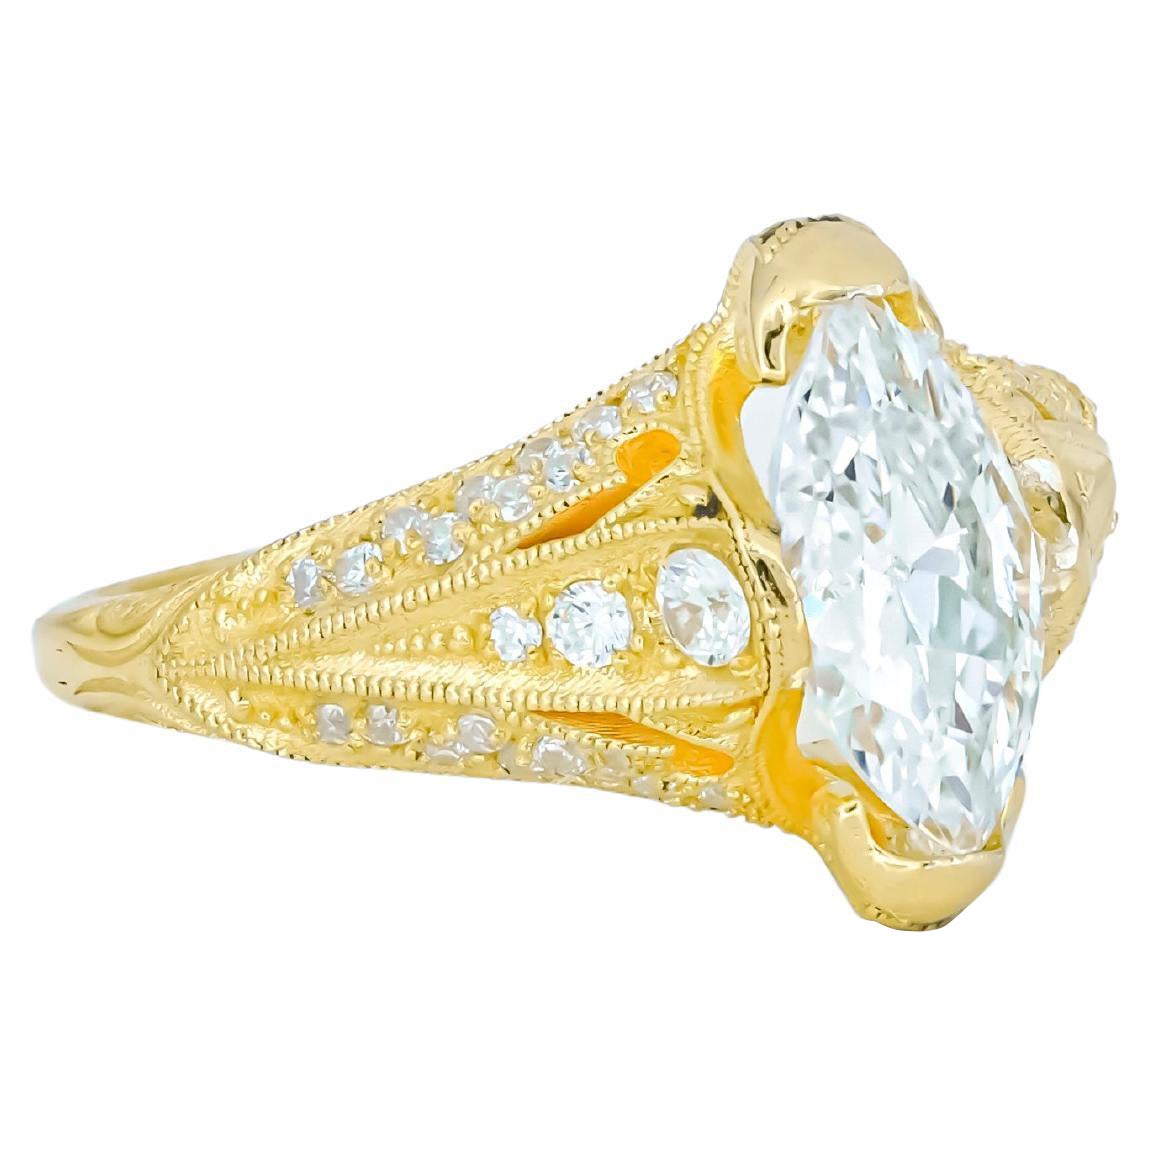 Marquise moissanite 14k gold engagement ring.